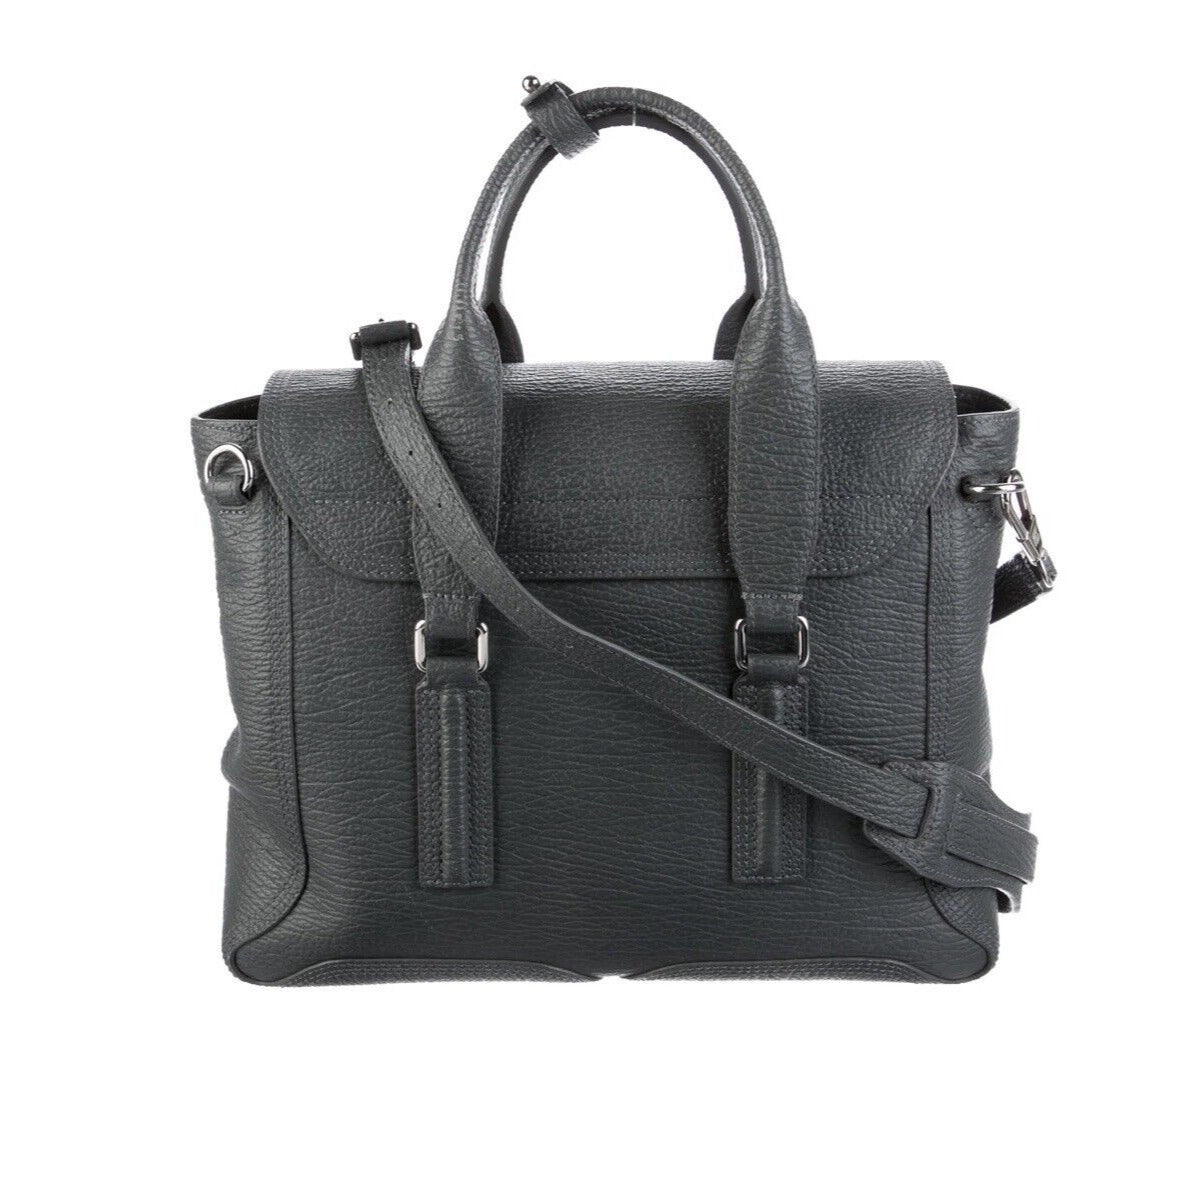 Back of 3.1 Phillip Lim Leather Pashli Medium Handbag Satchel In Gray on a White Background